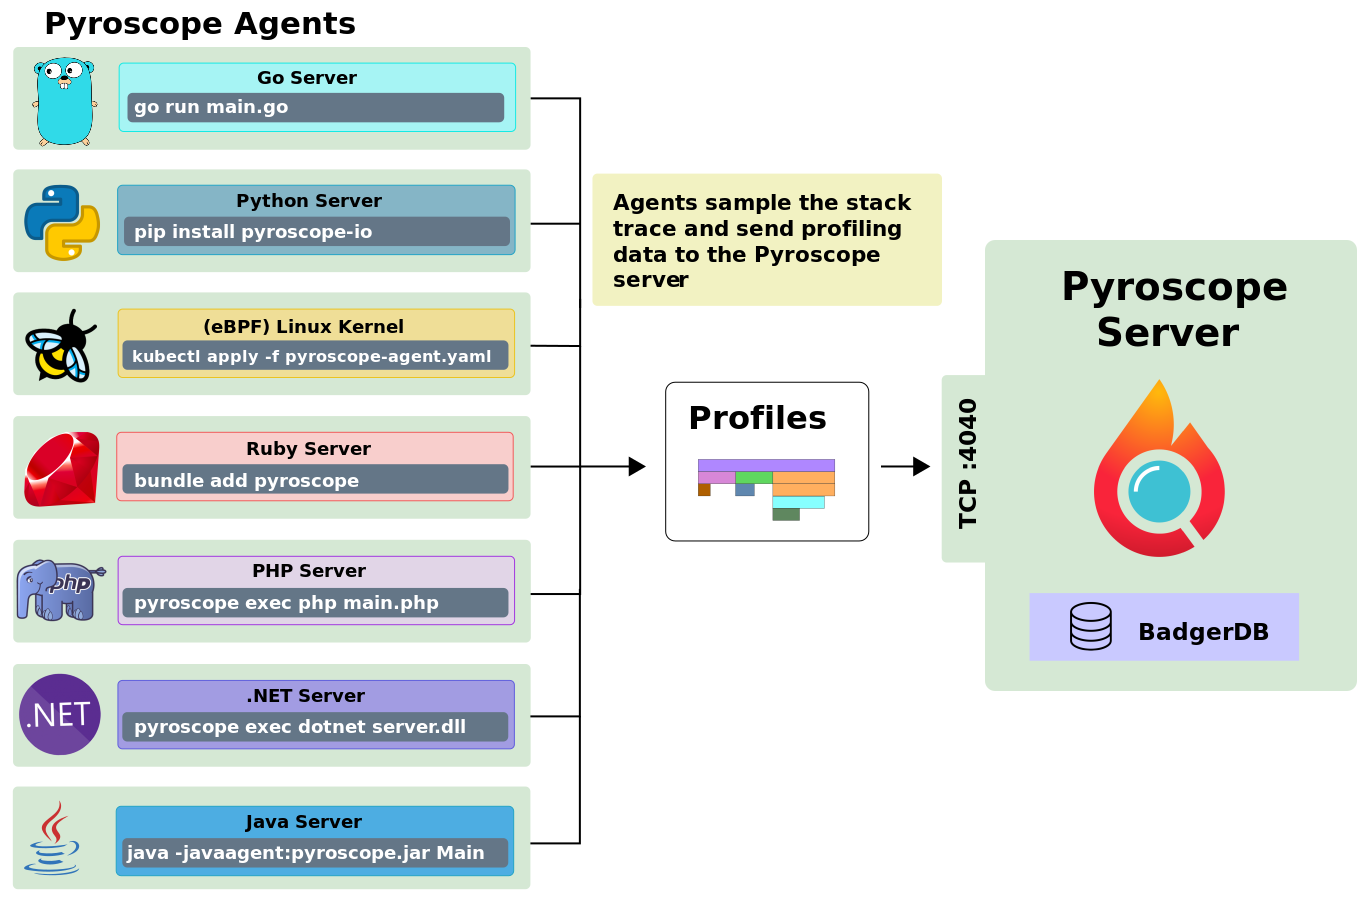 Image of Pyroscope Agent Profiler